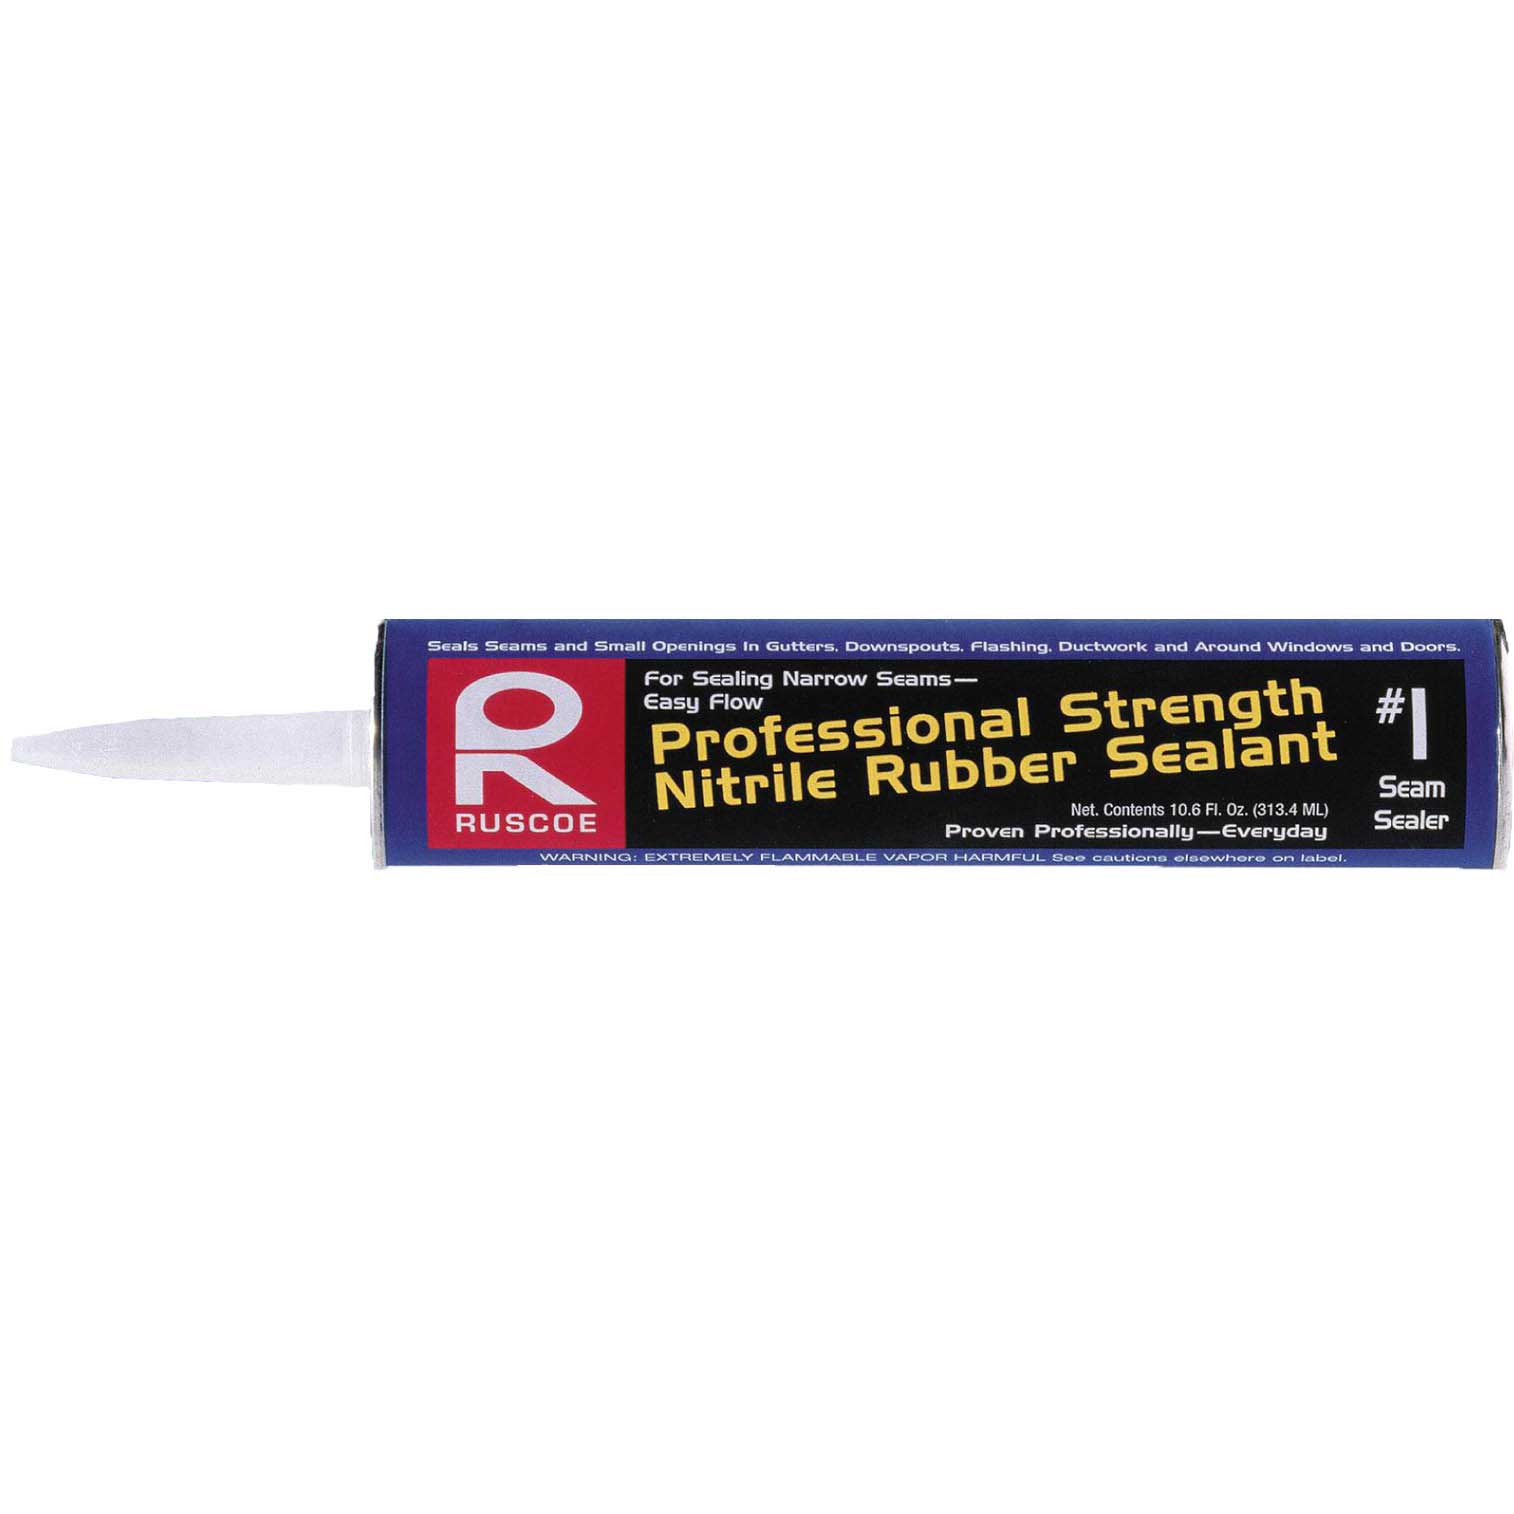 Ruscoe Professional Strength Nitrile Rubber Sealant